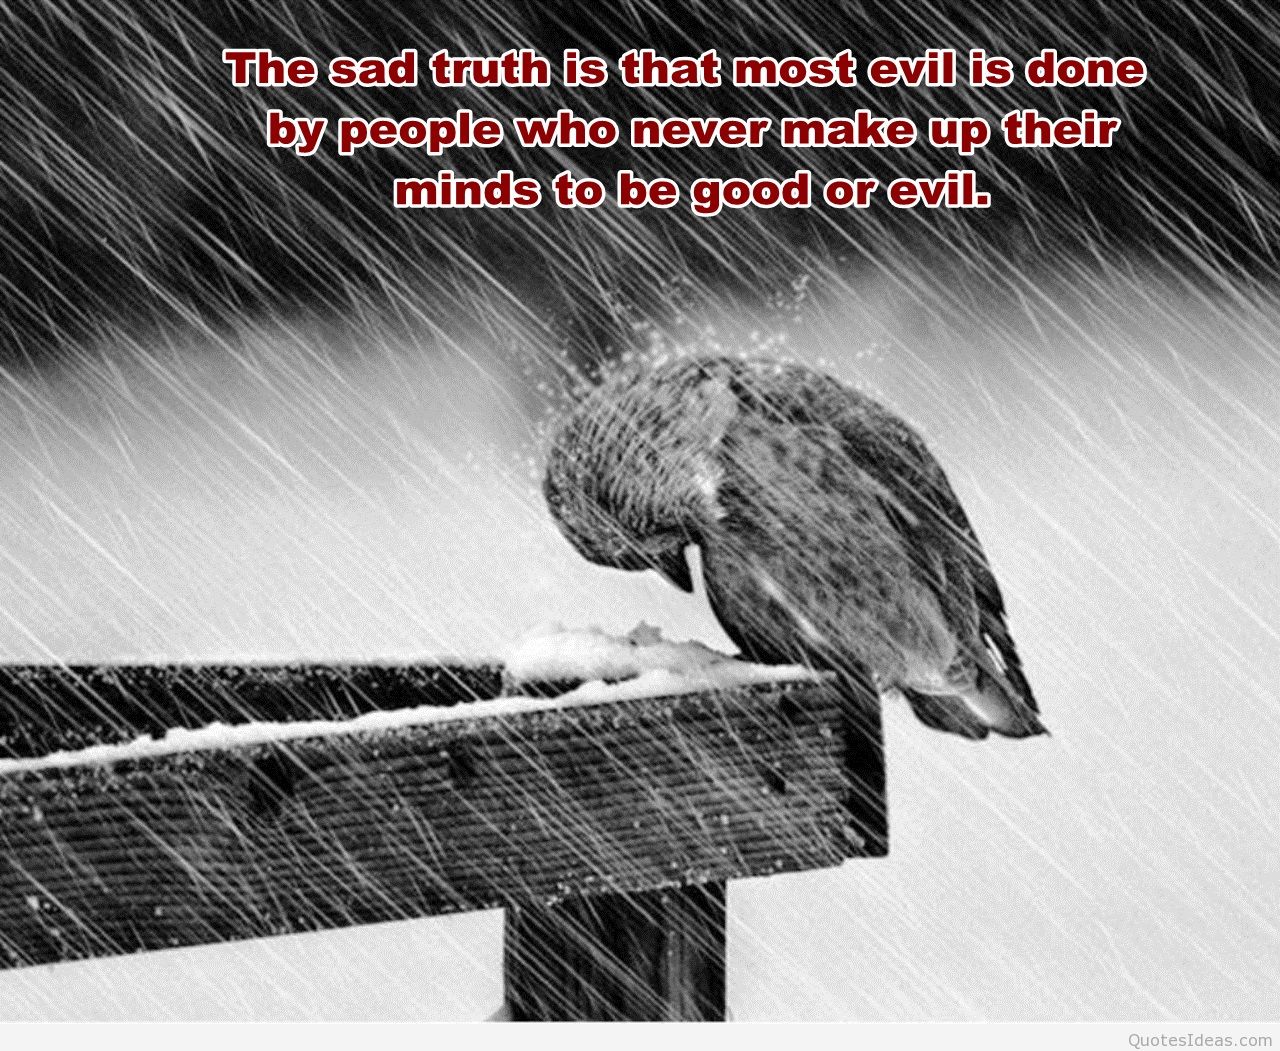 Cute Sad Rain Photo Quote - Love Sad Rain Quotes , HD Wallpaper & Backgrounds